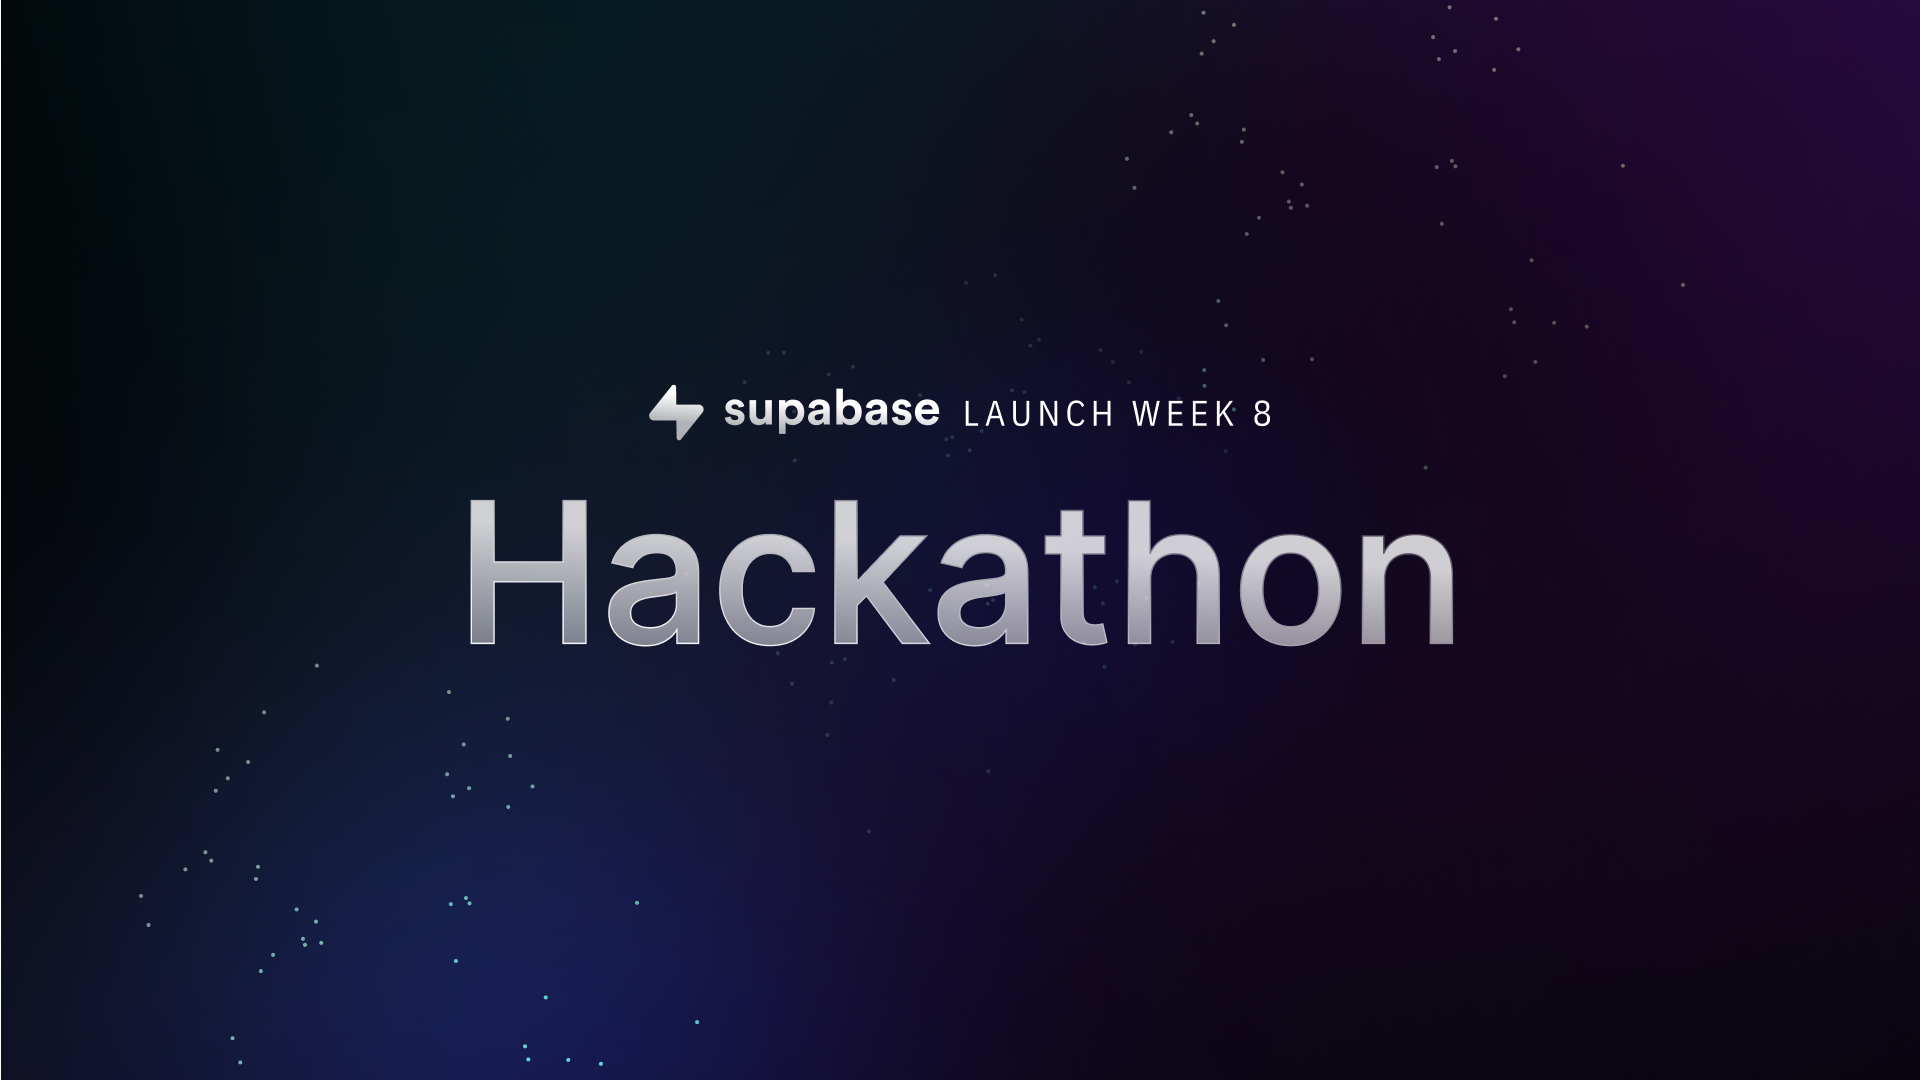 Supabase Launch Week 8 Hackathon